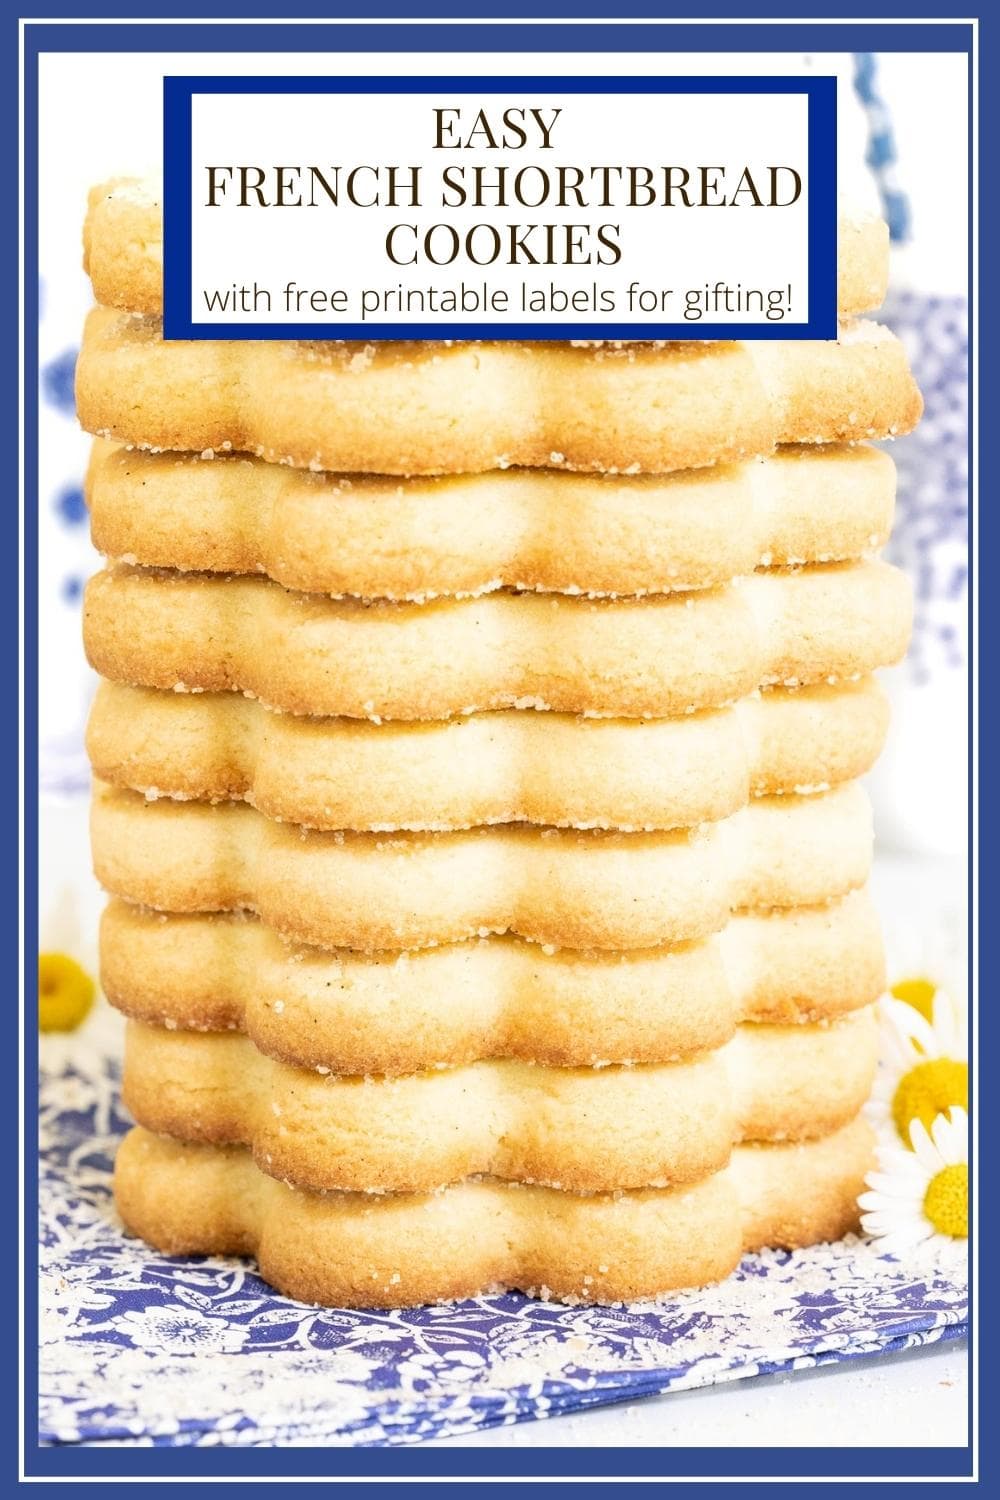 French Shortbread Cookies (Sablés Bretons)